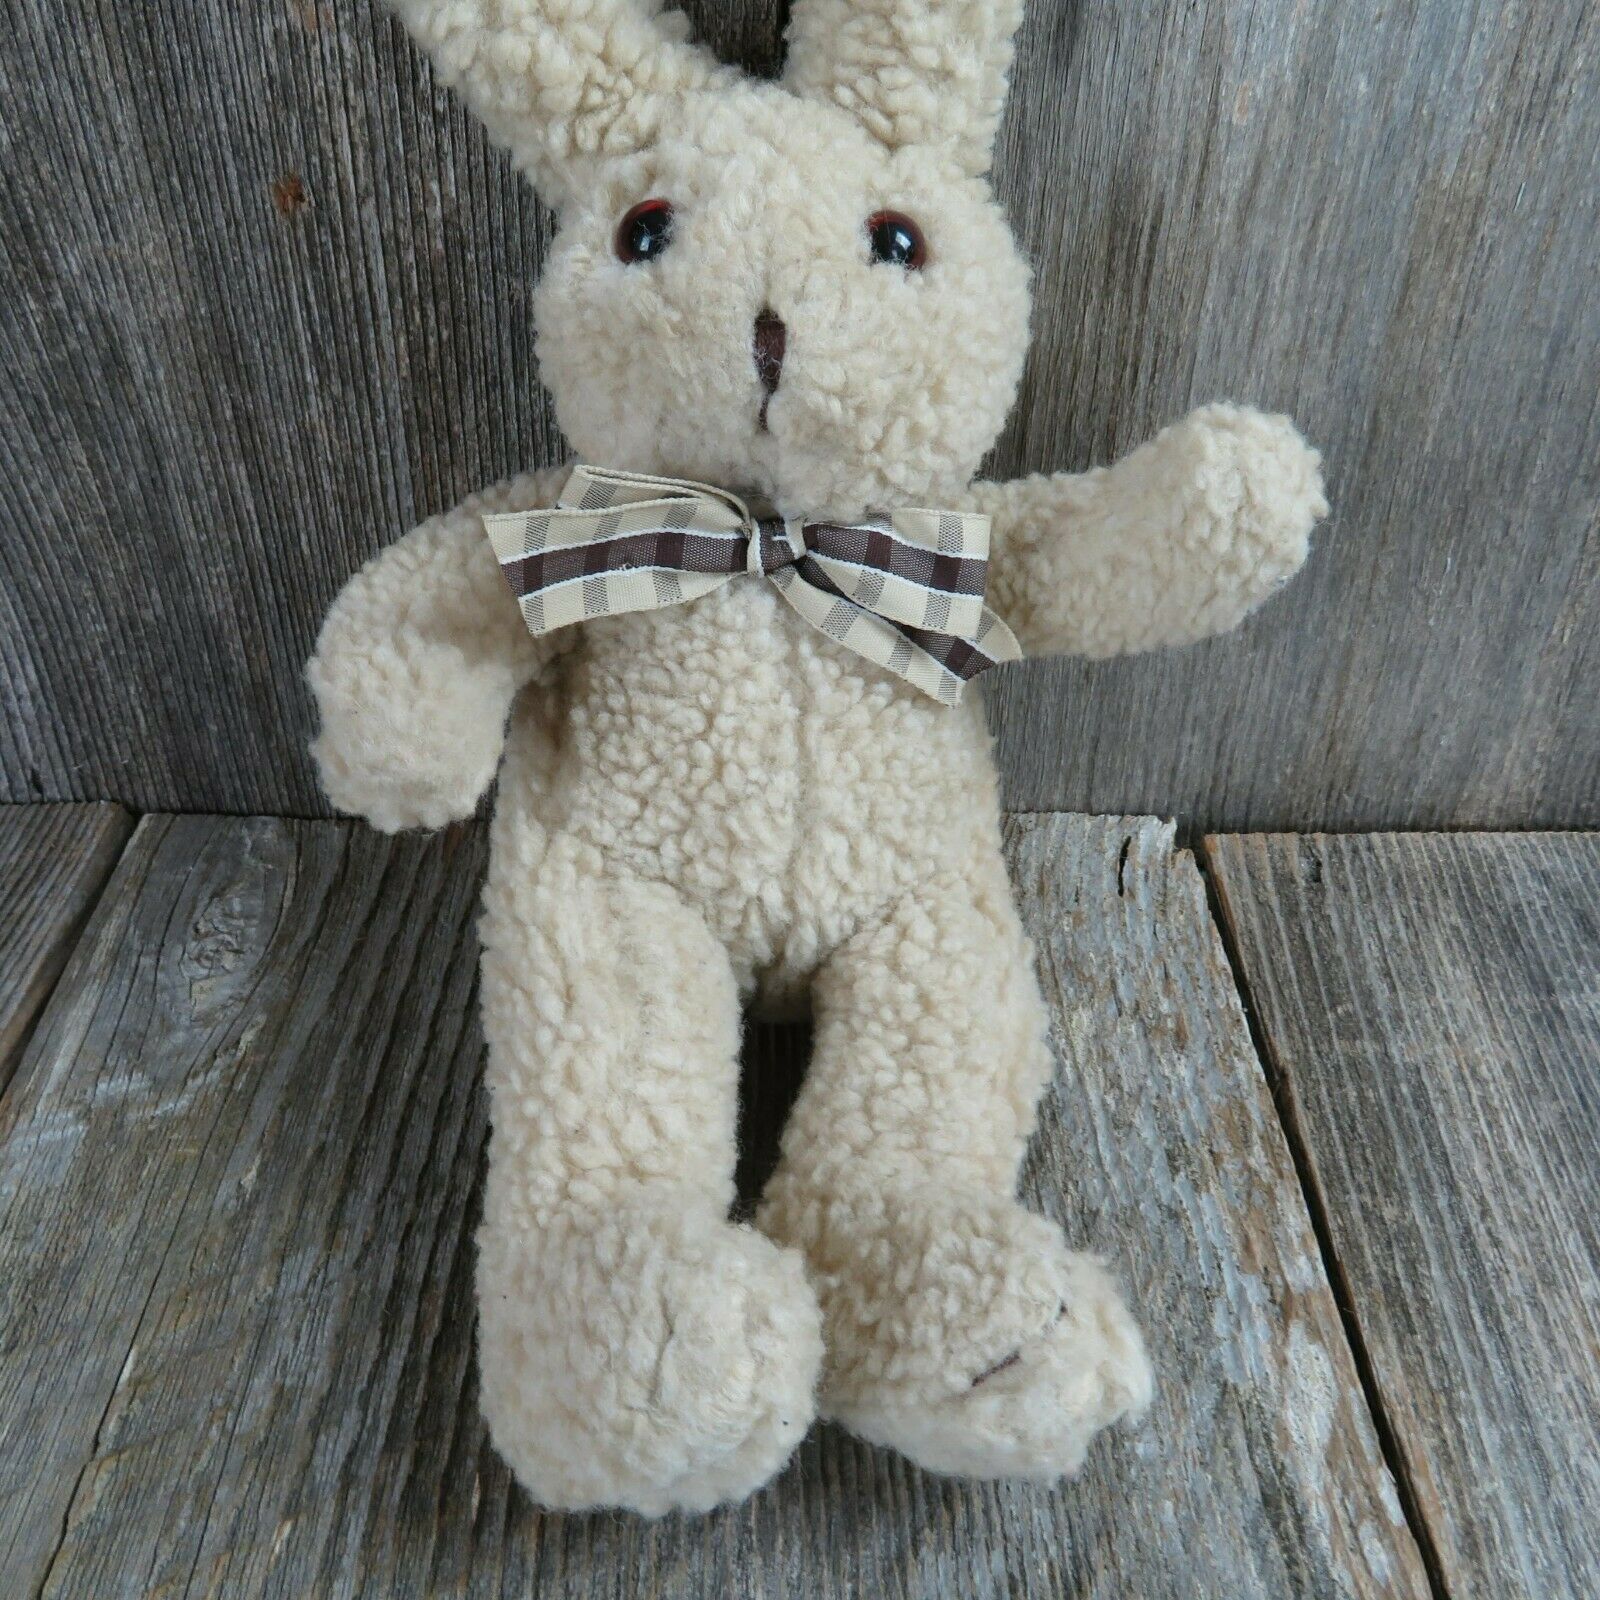 Vintage Bunny Rabbit Plush Russ Easter Nibbles Jr Stuffed Animal Toy Doll - At Grandma's Table